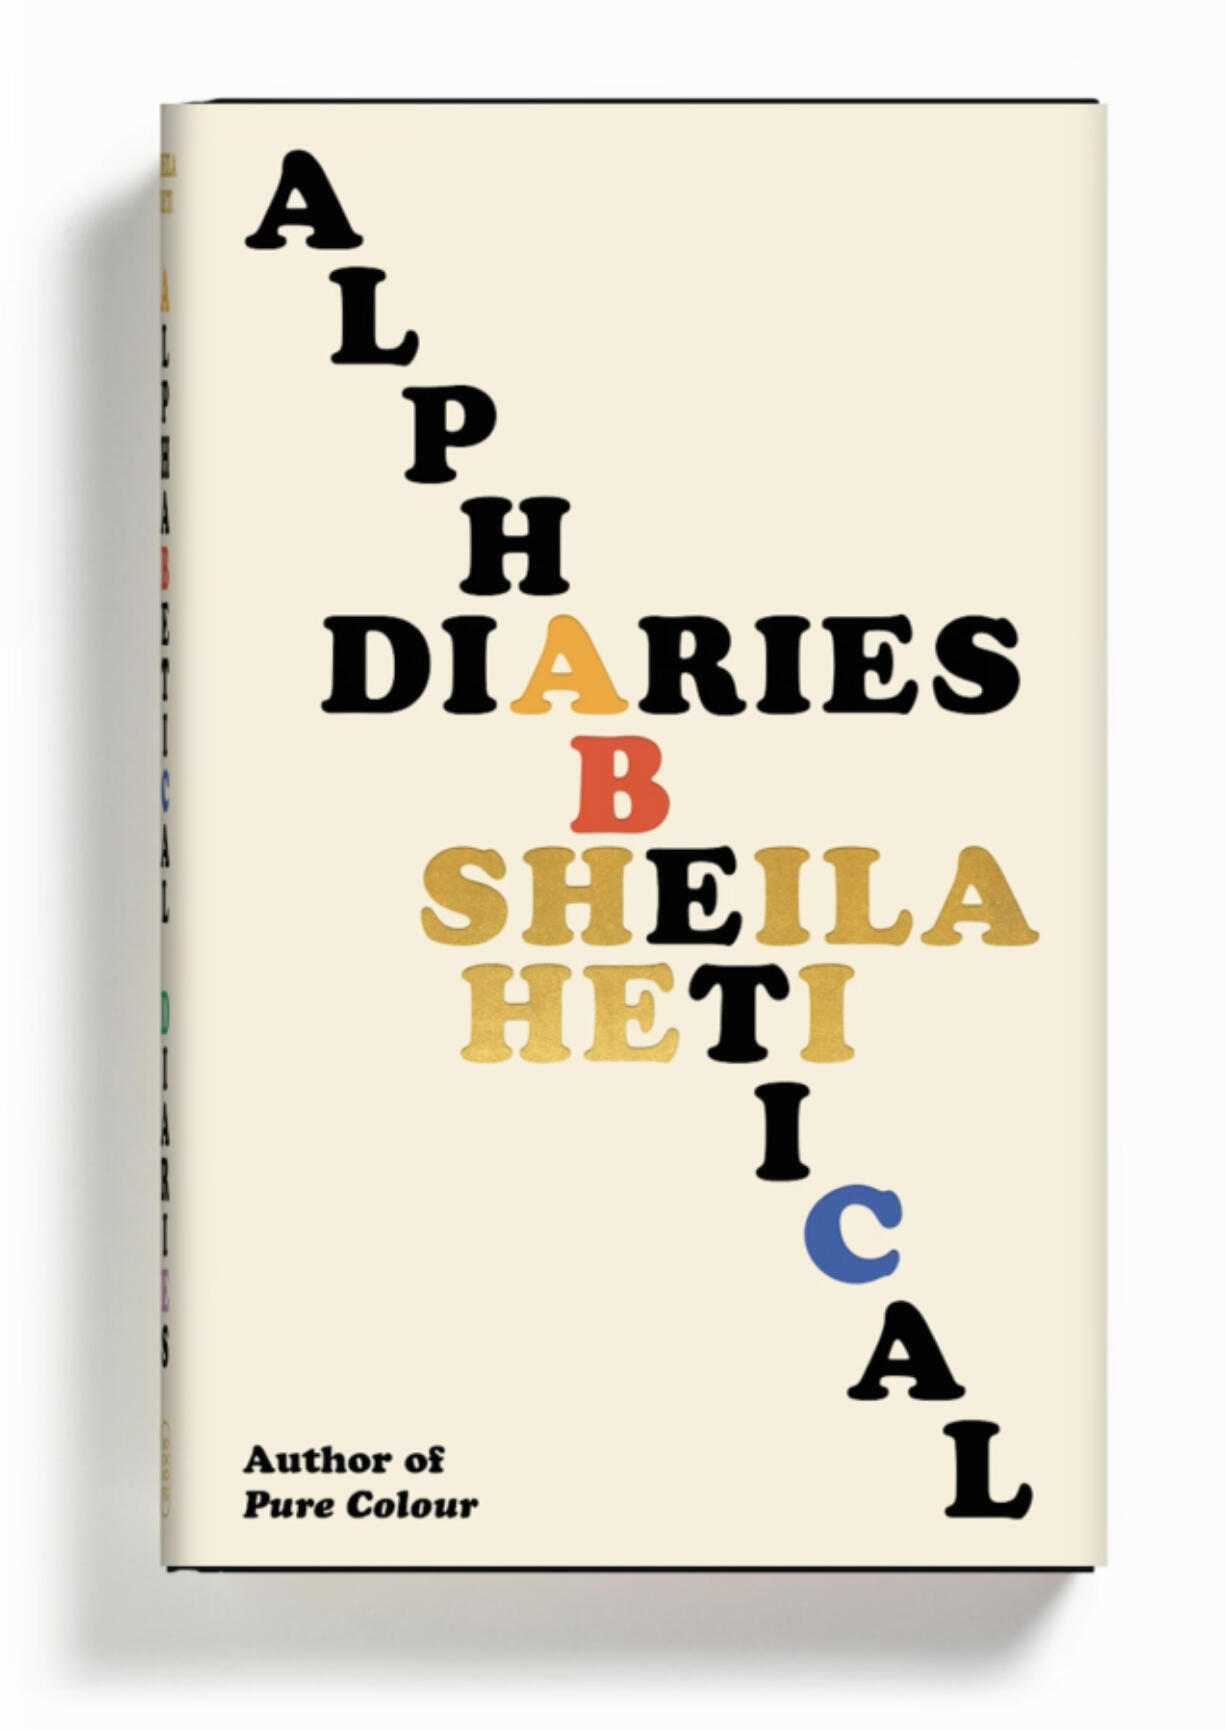 &ldquo;Alphabetical Diaries,&rdquo; by Sheila Heti.